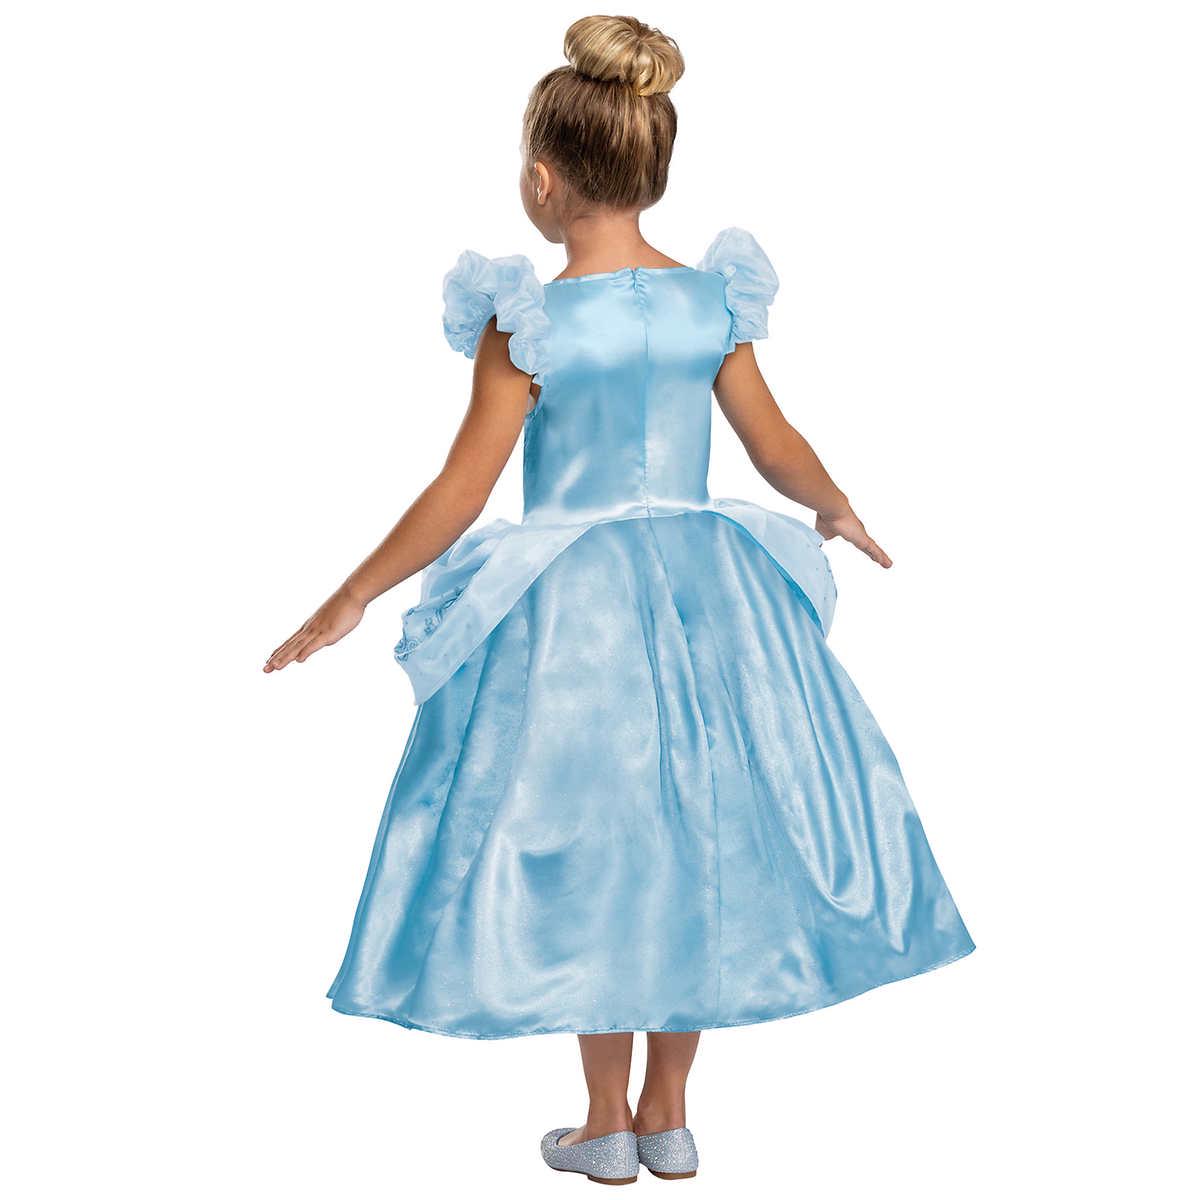 Disney Princess Cinderella Prestige Child Costume